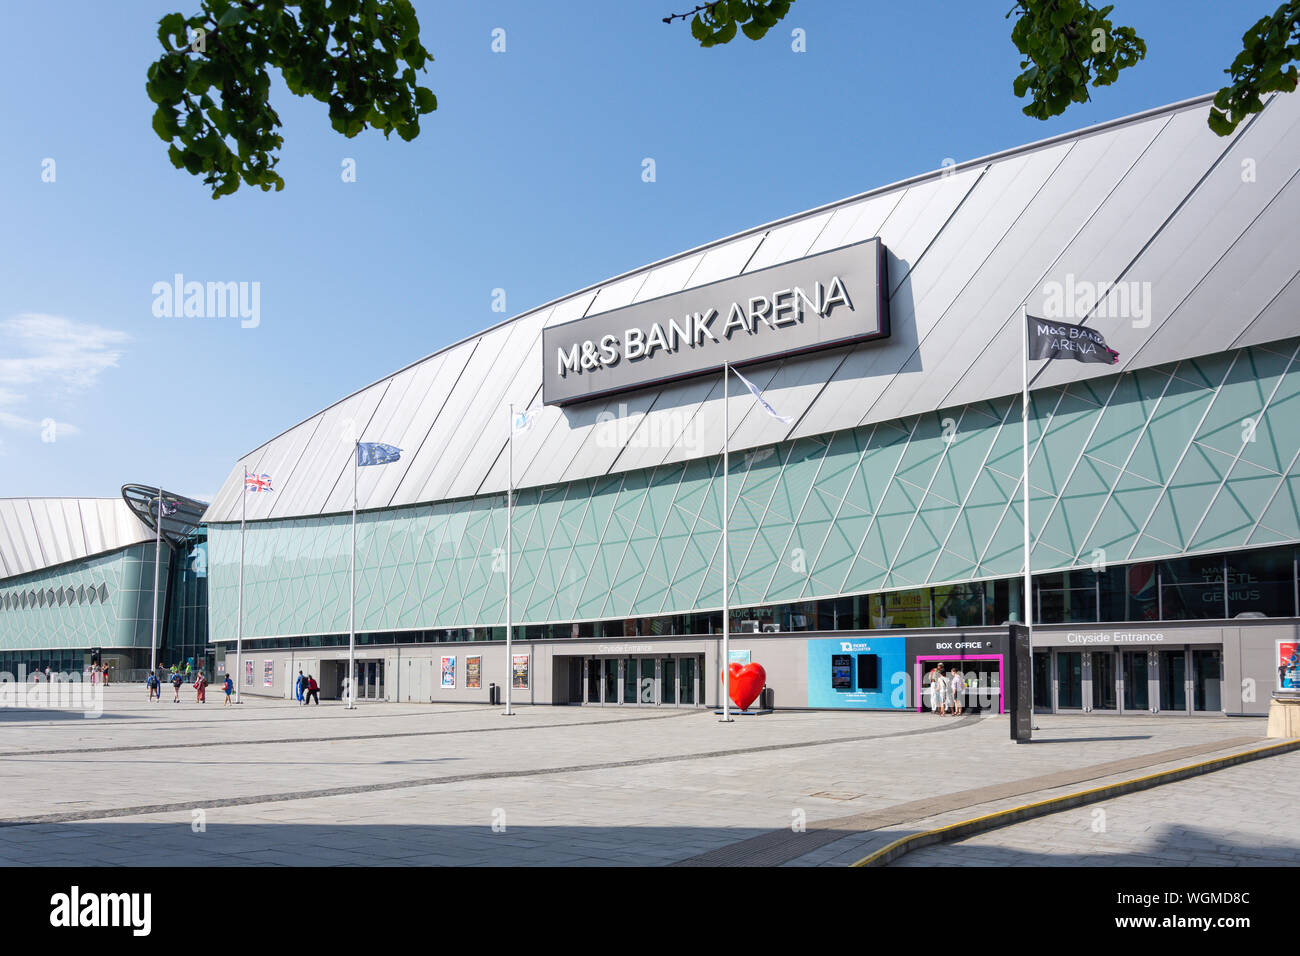 M&S Bank Arena, King's Dock, Port of Liverpool, Liverpool, Merseyside, England, United Kingdom Stock Photo